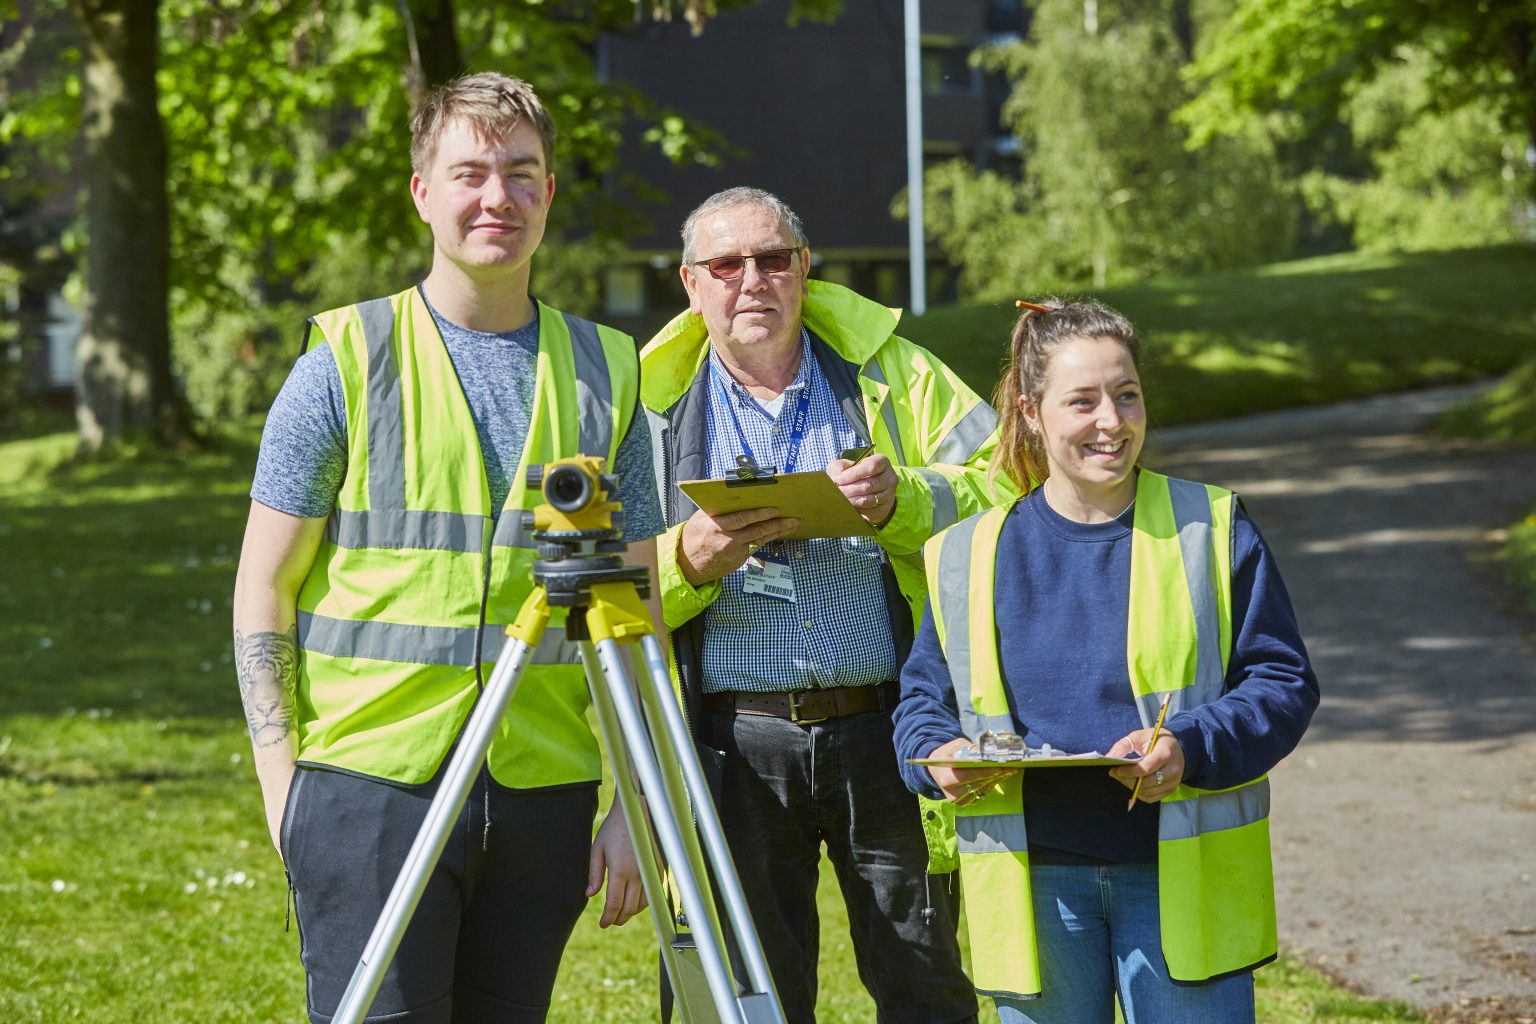 Premier Construction News - Leeds College of Building Ranked 14th Best UK Apprenticeship Training Provider